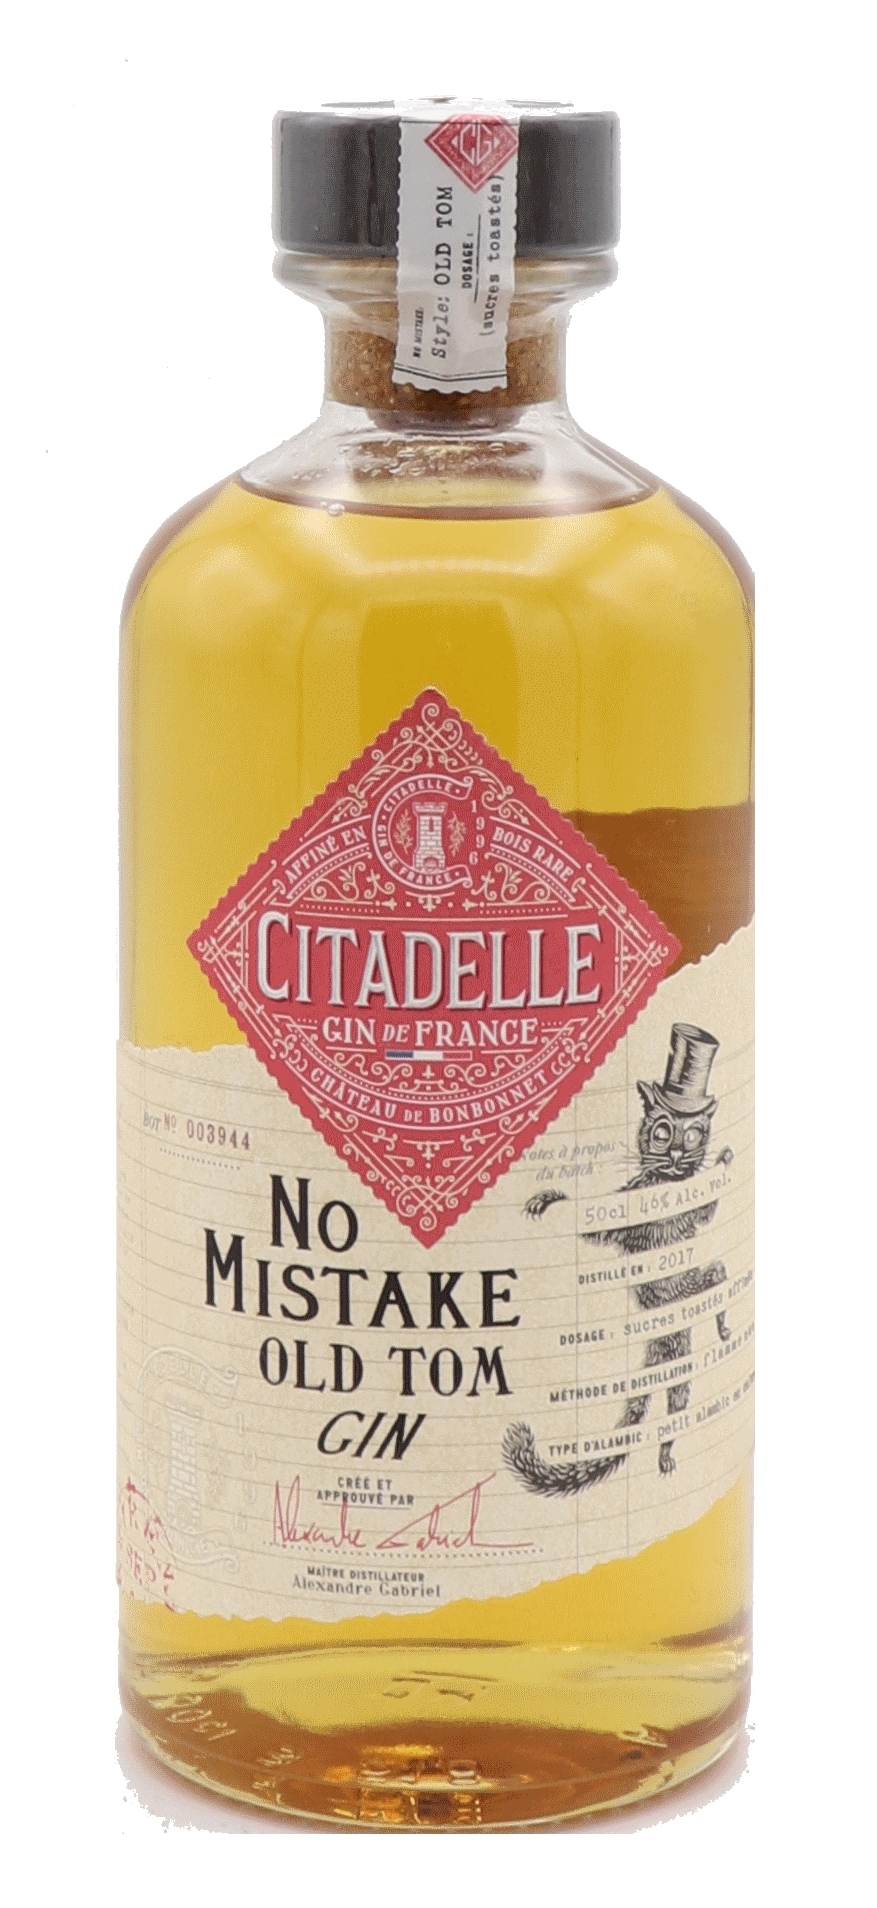 Citadelle - No Mistake old Tom Gin